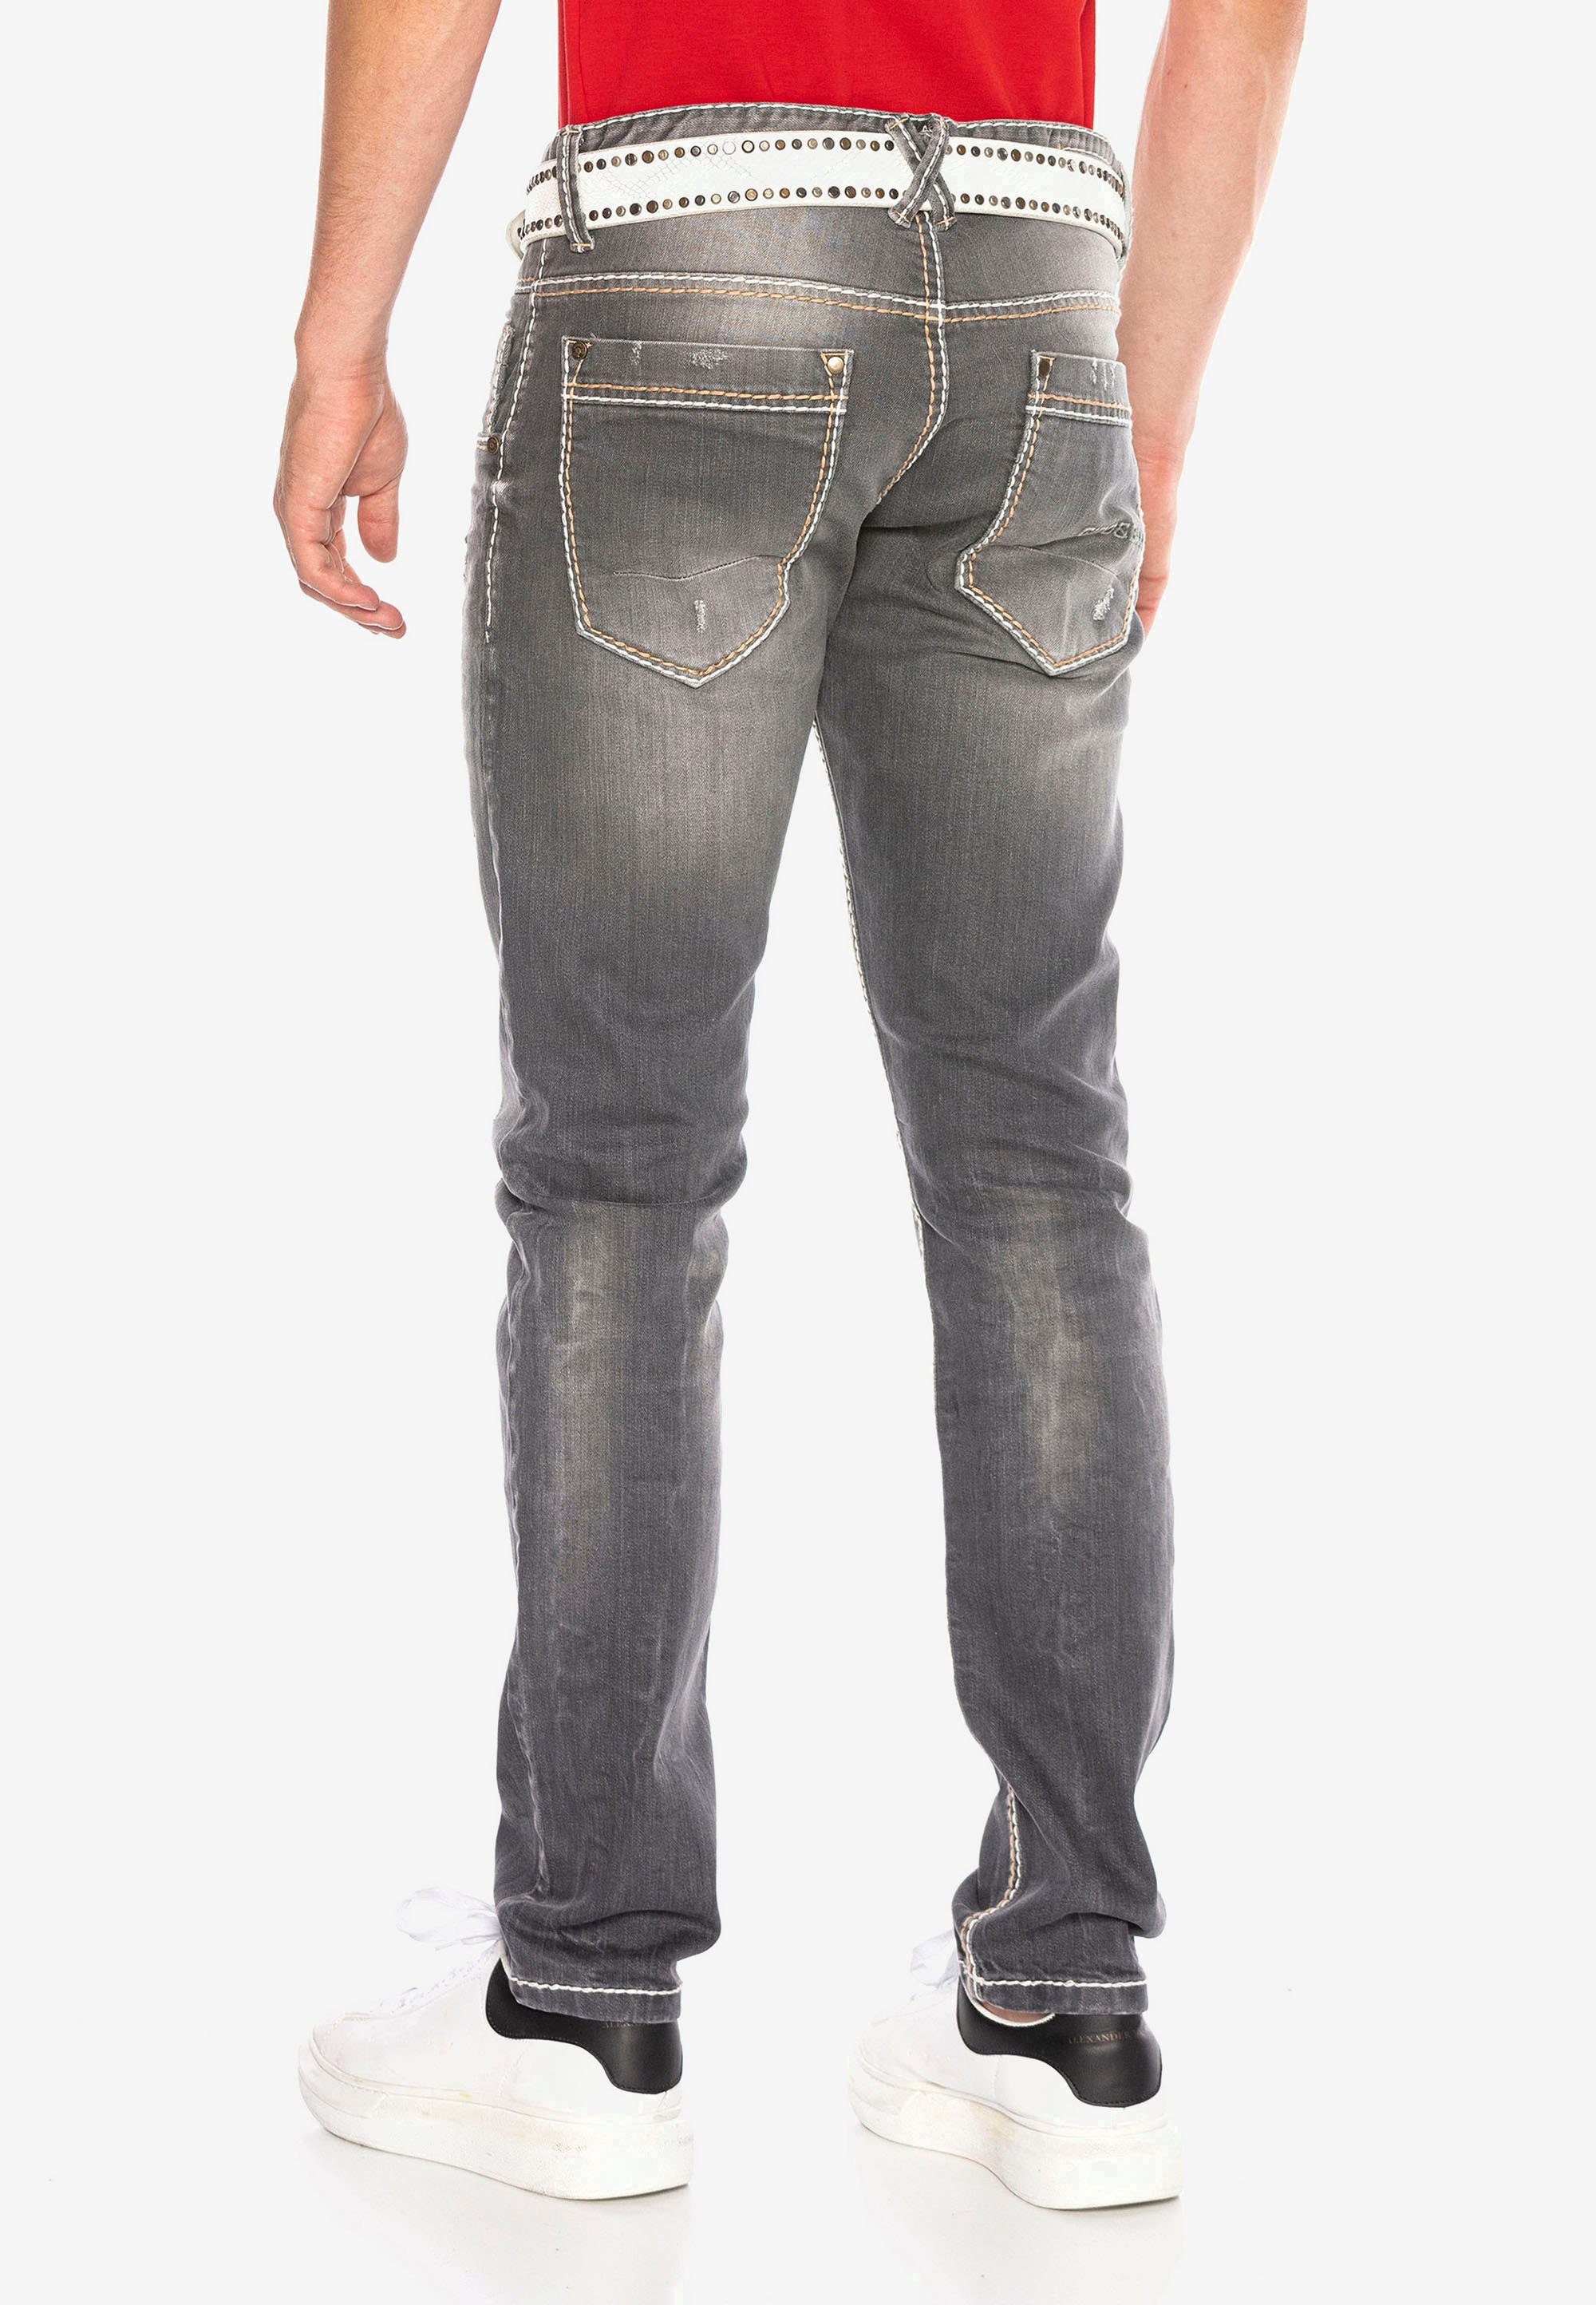 modernem & Baxx Fit-Schnitt Cipo in Bequeme Straight Jeans CD668